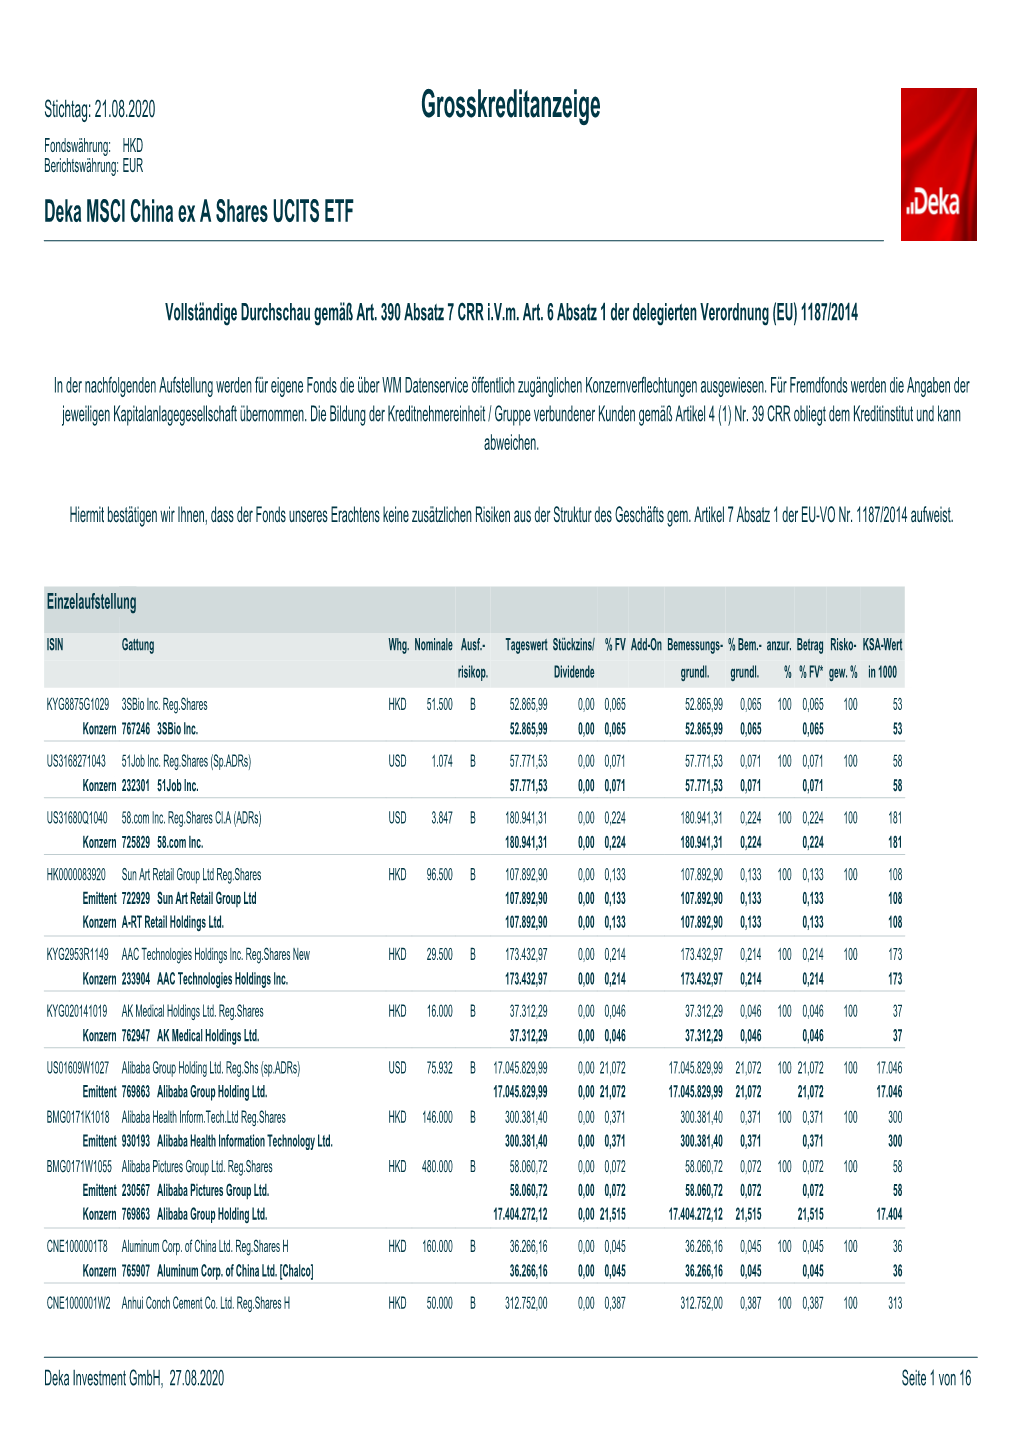 Grosskreditanzeige Fondswährung: HKD Berichtswährung: EUR Deka MSCI China Ex a Shares UCITS ETF